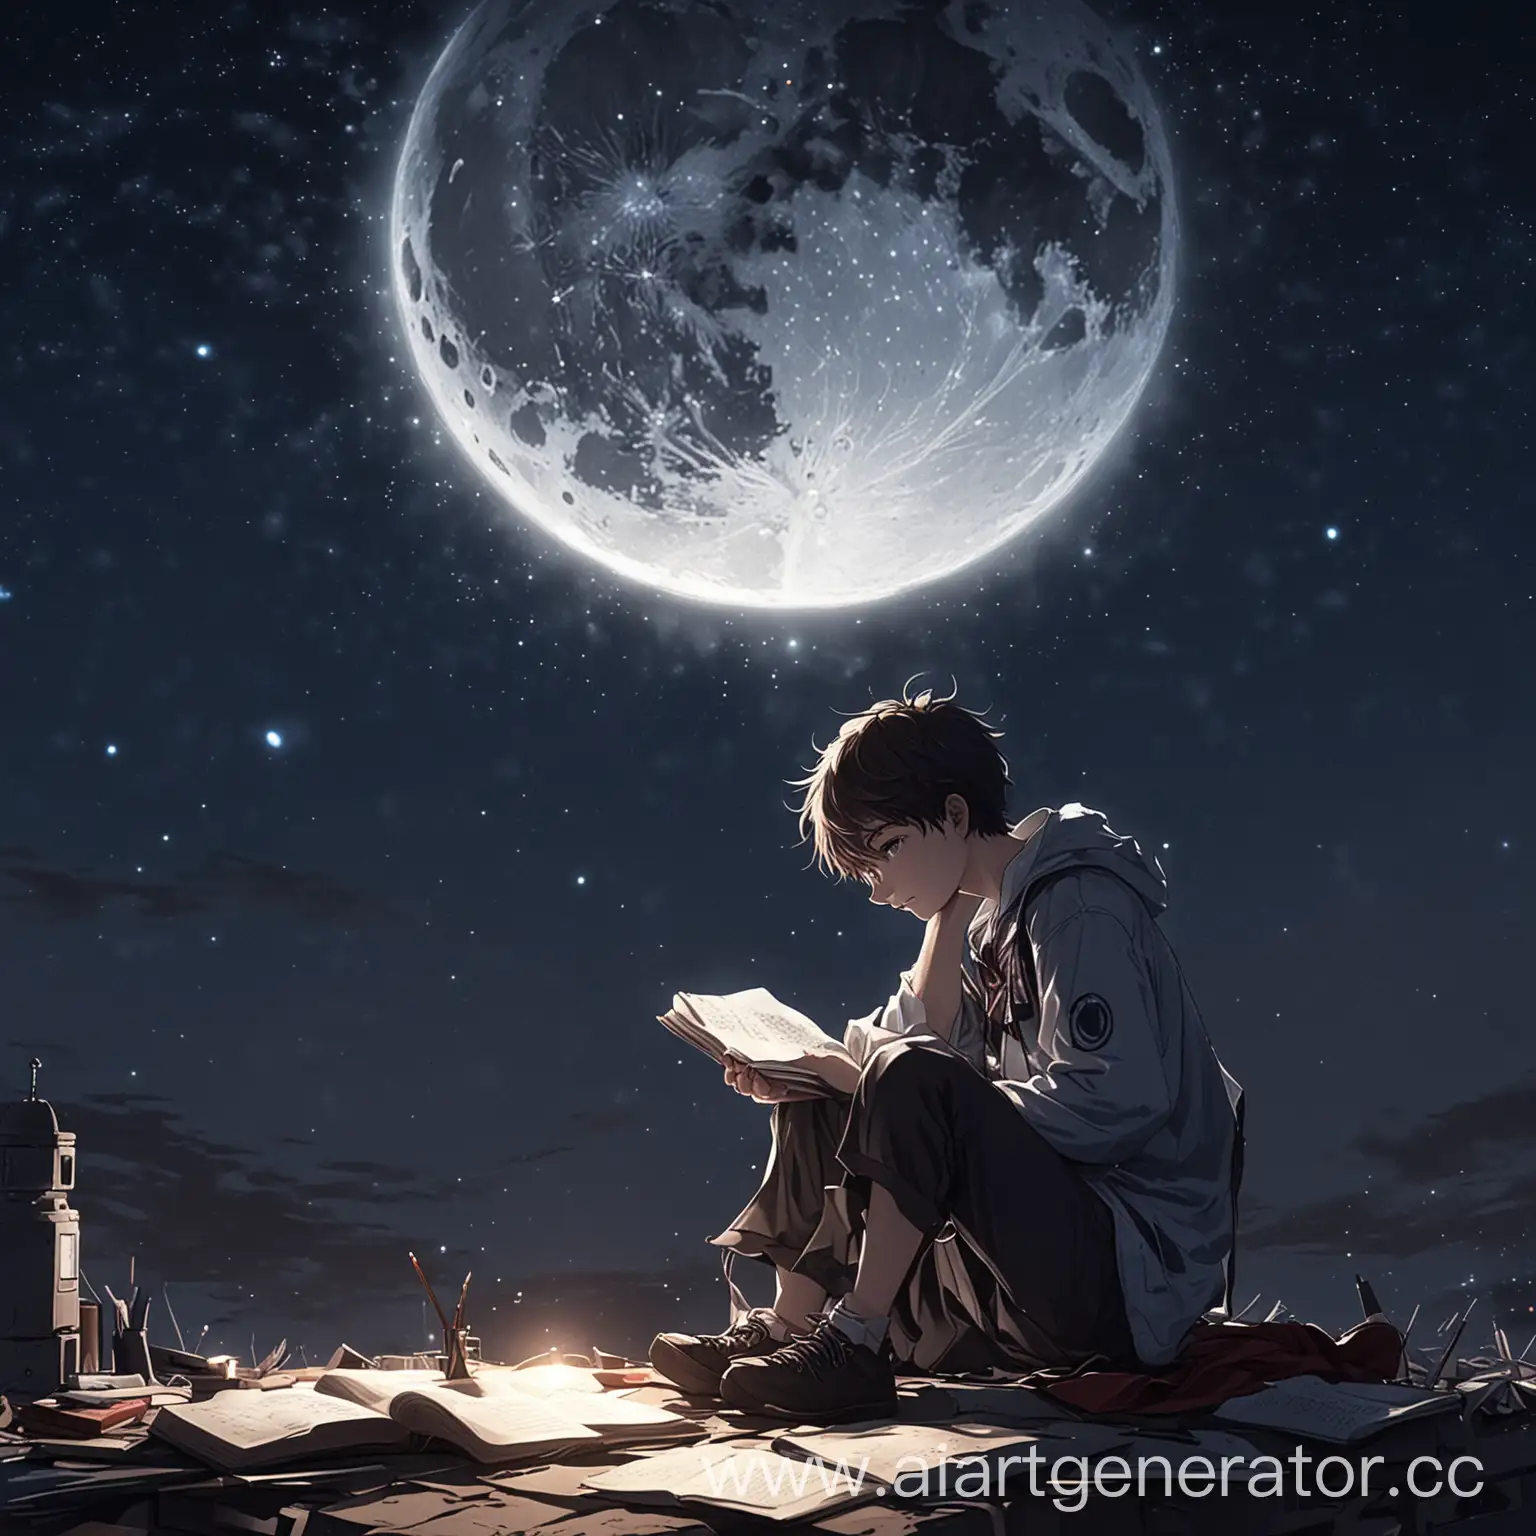 Boy-Studying-Under-Starry-Night-Sky-in-Anime-Scene